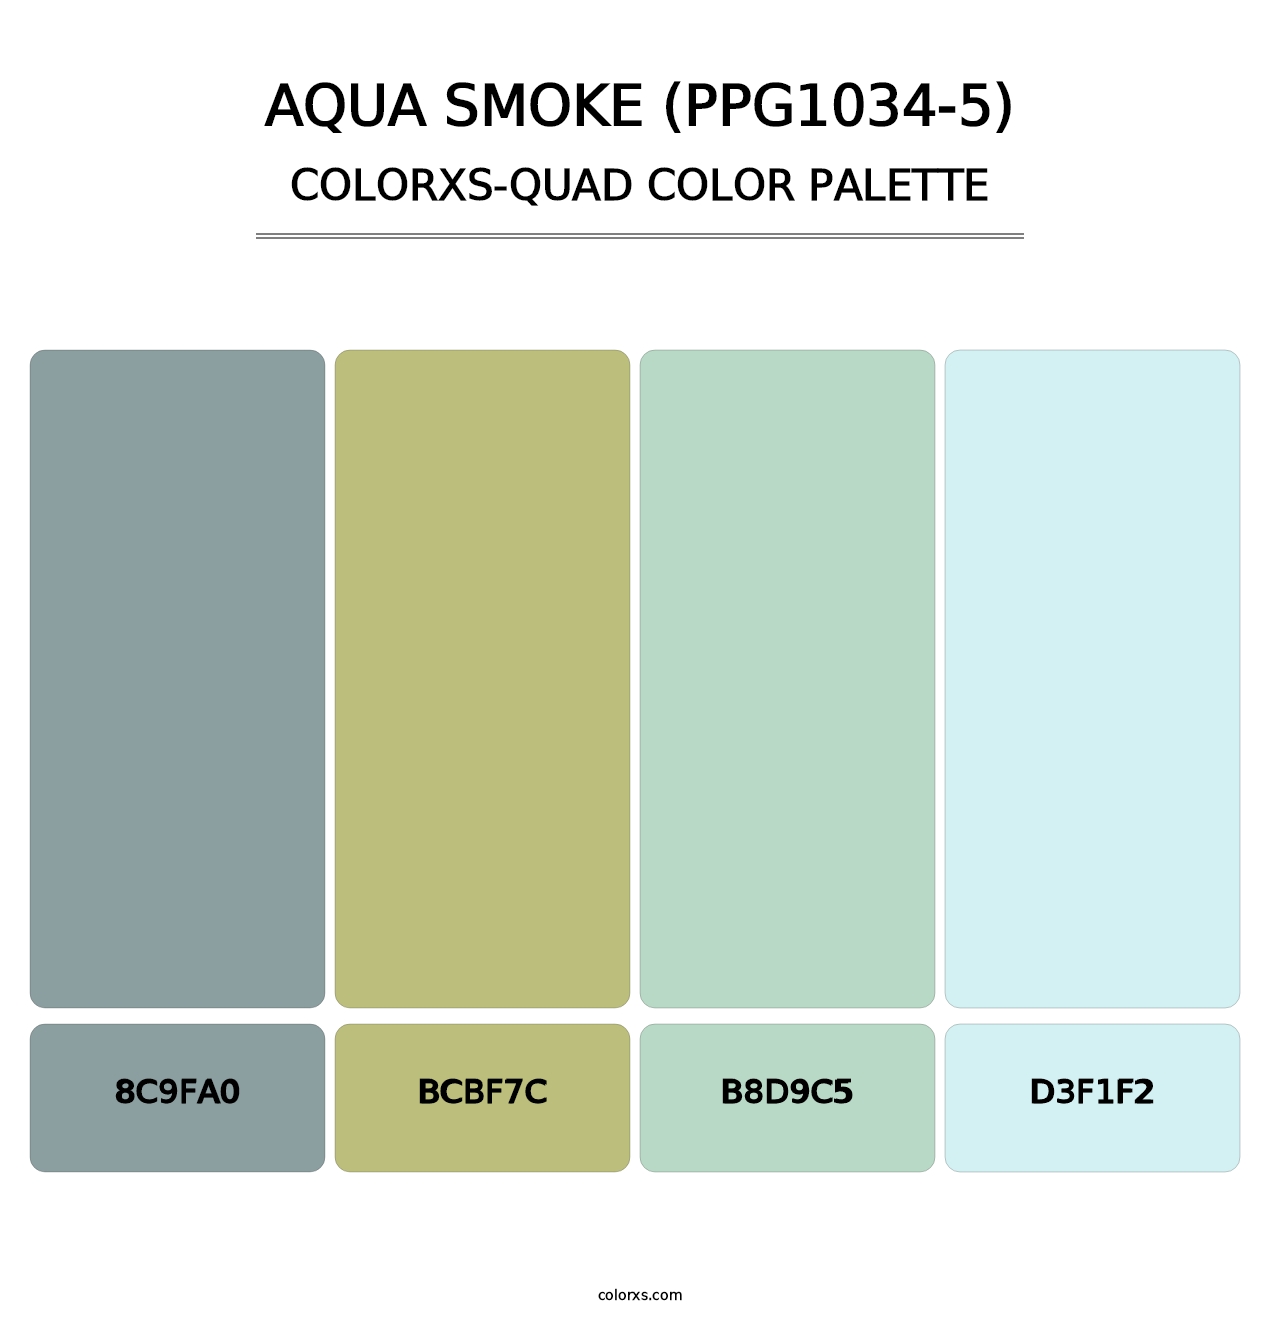 Aqua Smoke (PPG1034-5) - Colorxs Quad Palette